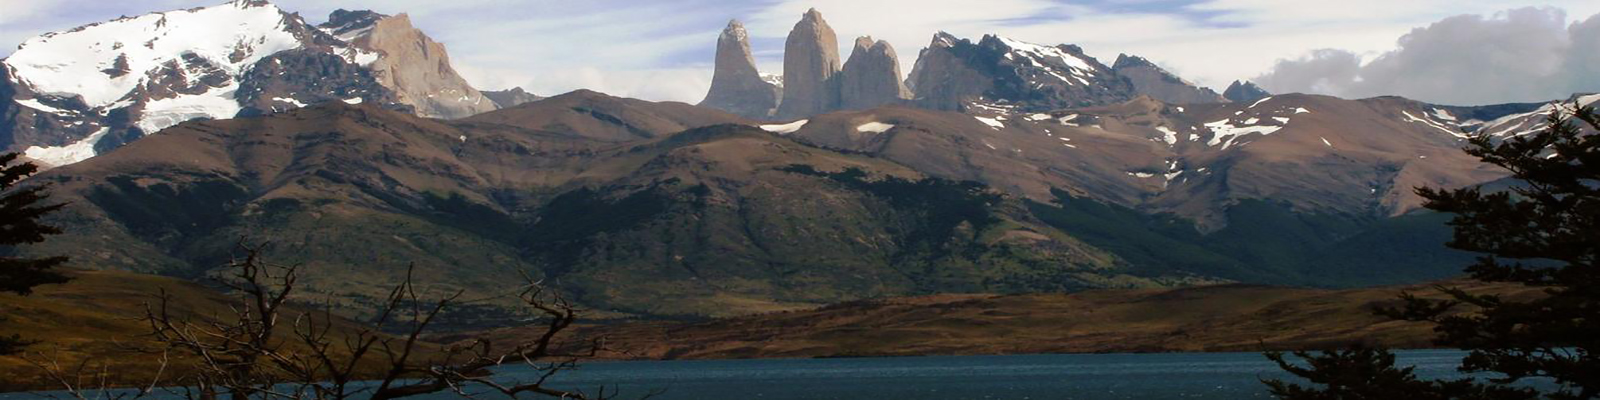 Torres del Paine Full Day Tour